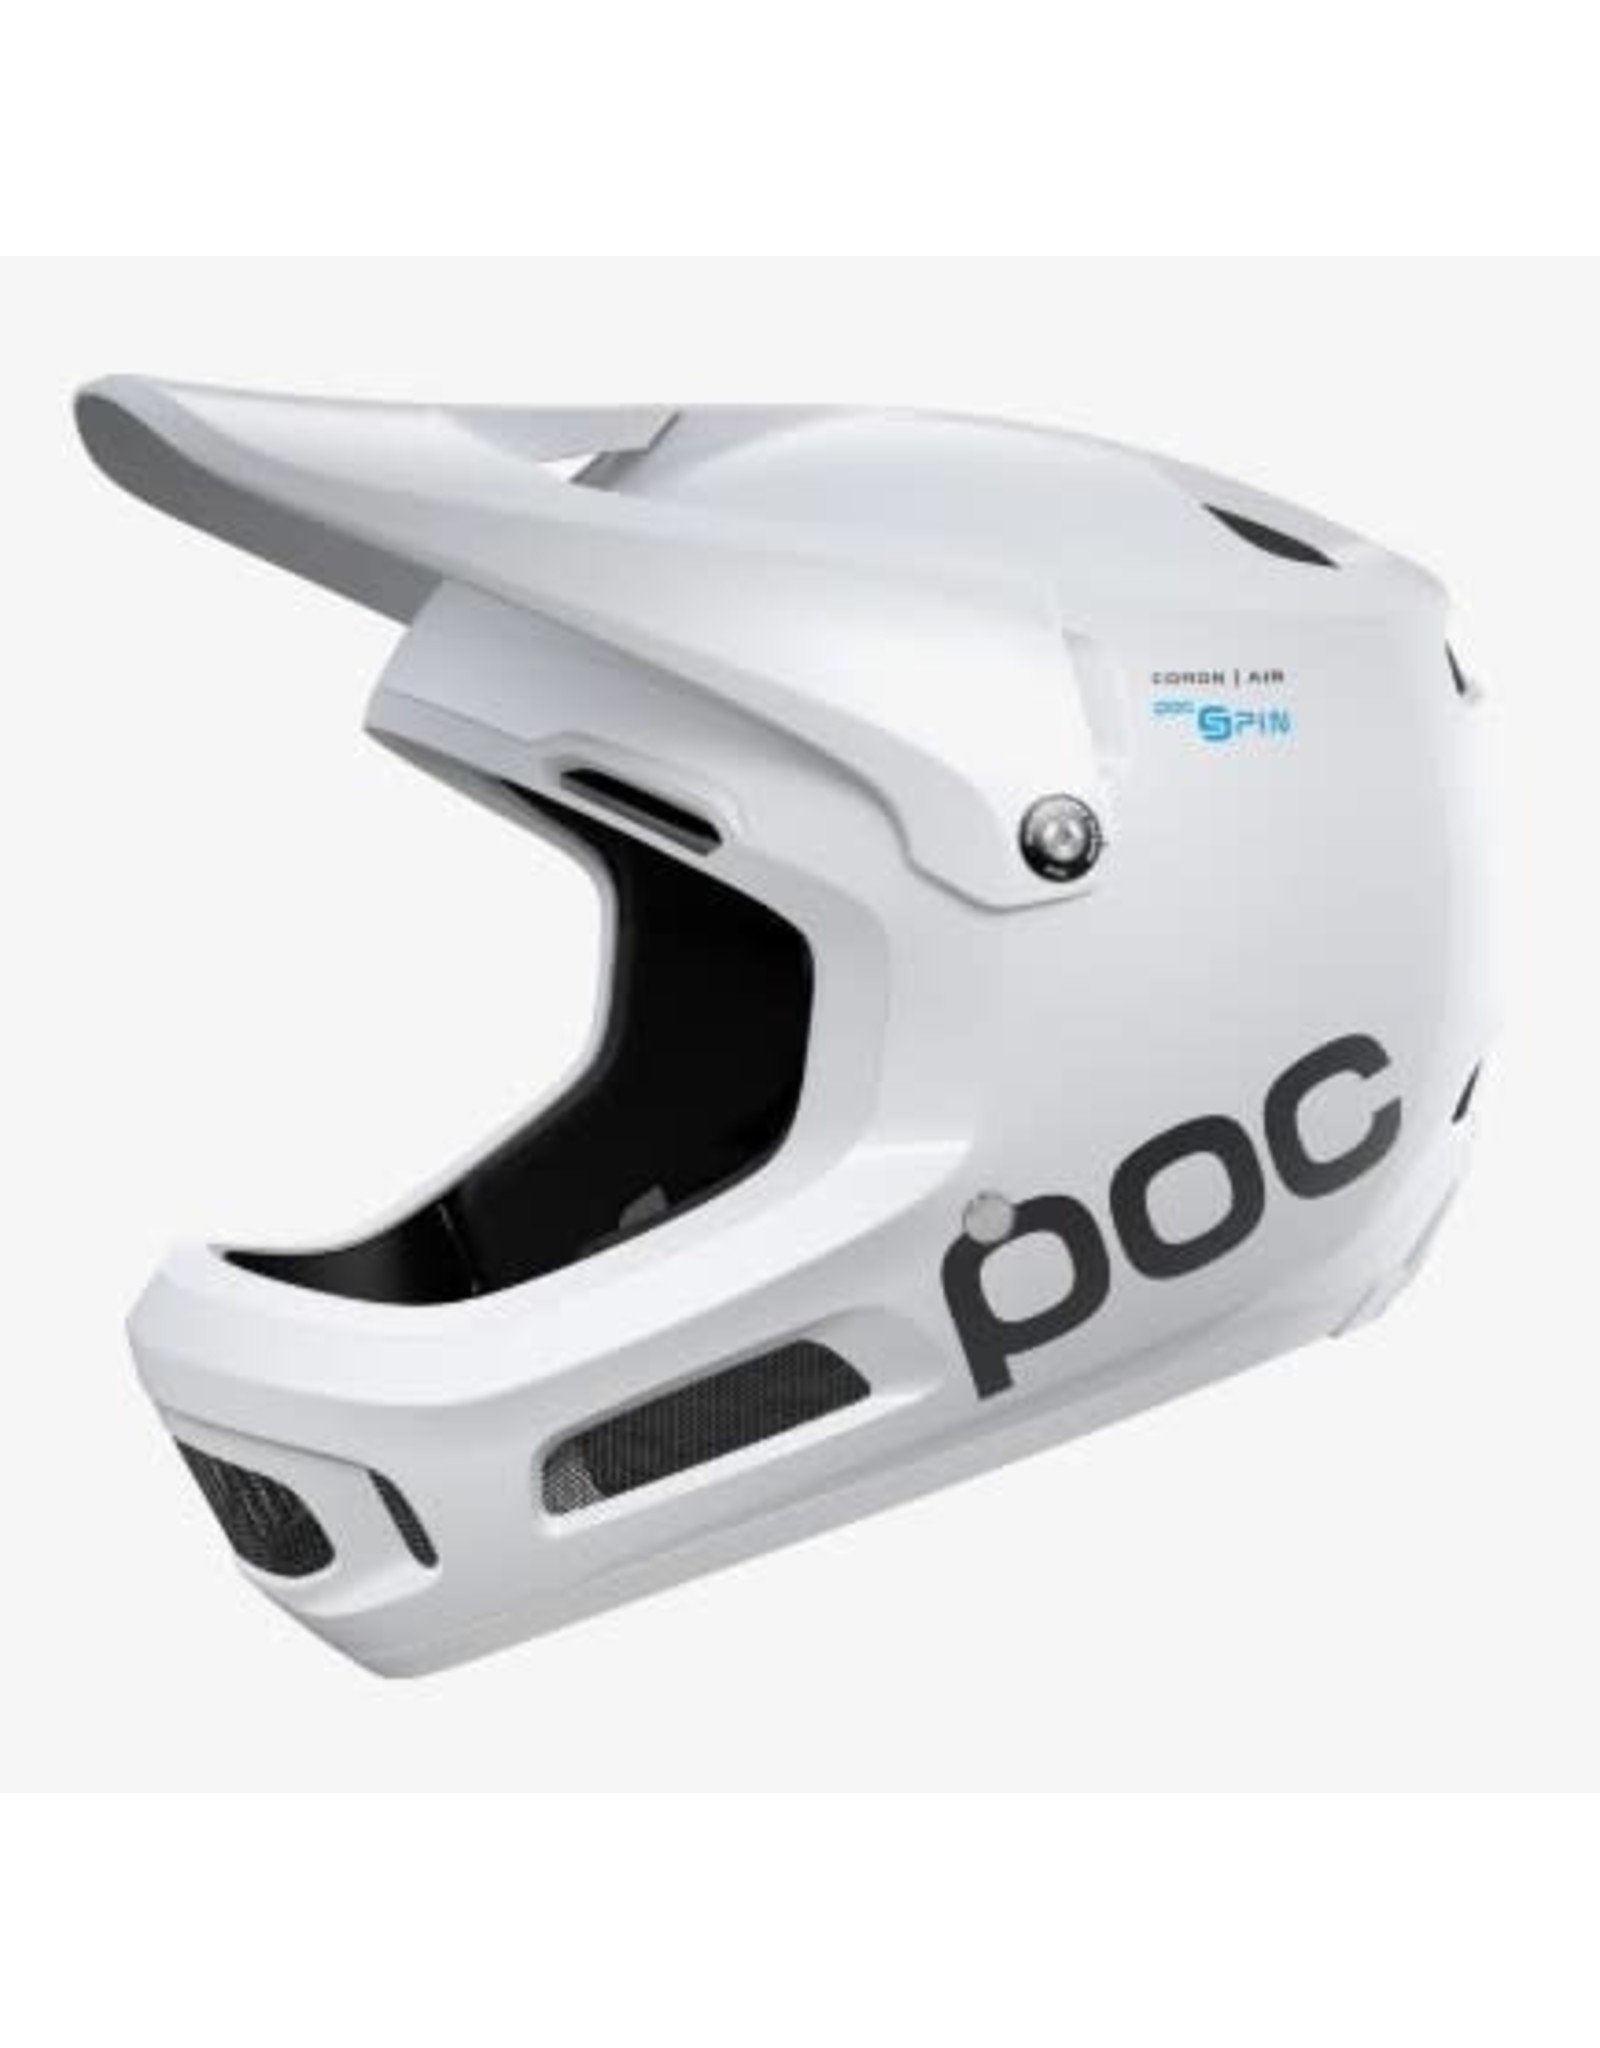 POC Helmet POC Coron Air Spin